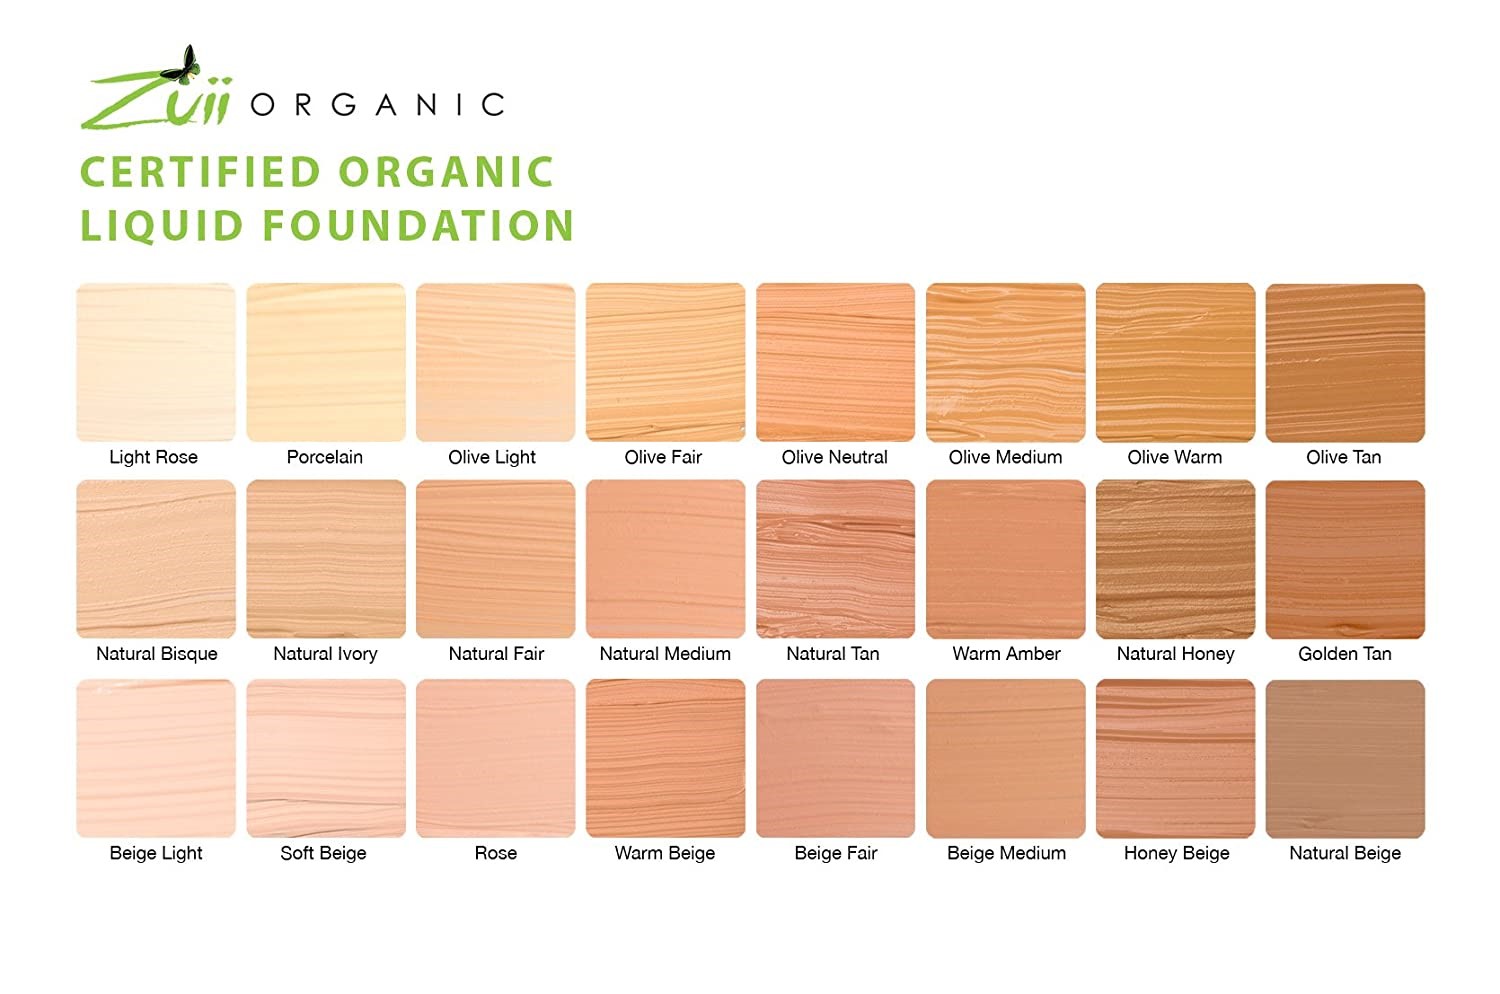 Zuii Organic + face + Liquid Foundation + Olive Medium (30 ml) + online